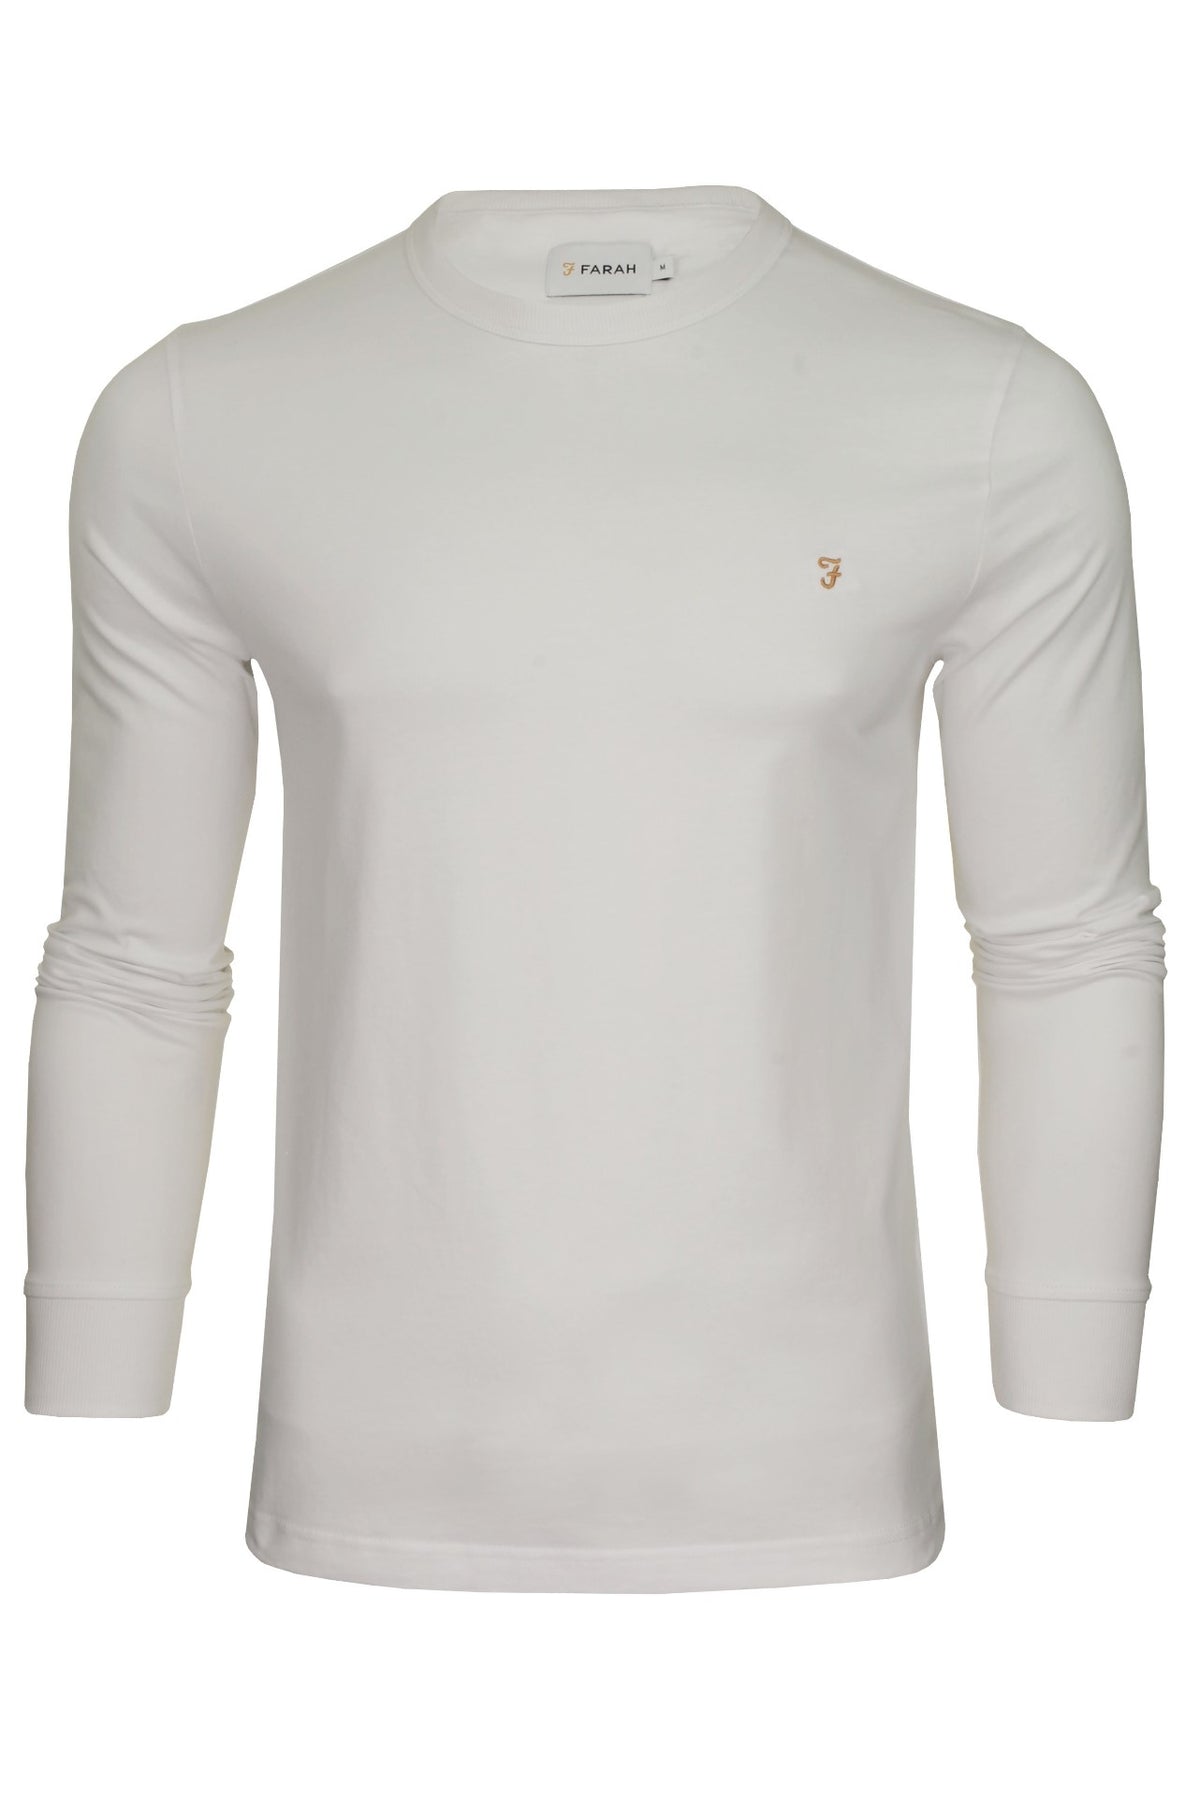 Farah Mens 'Worthington' Long Sleeved T-Shirt, 01, F4Ksb057, White